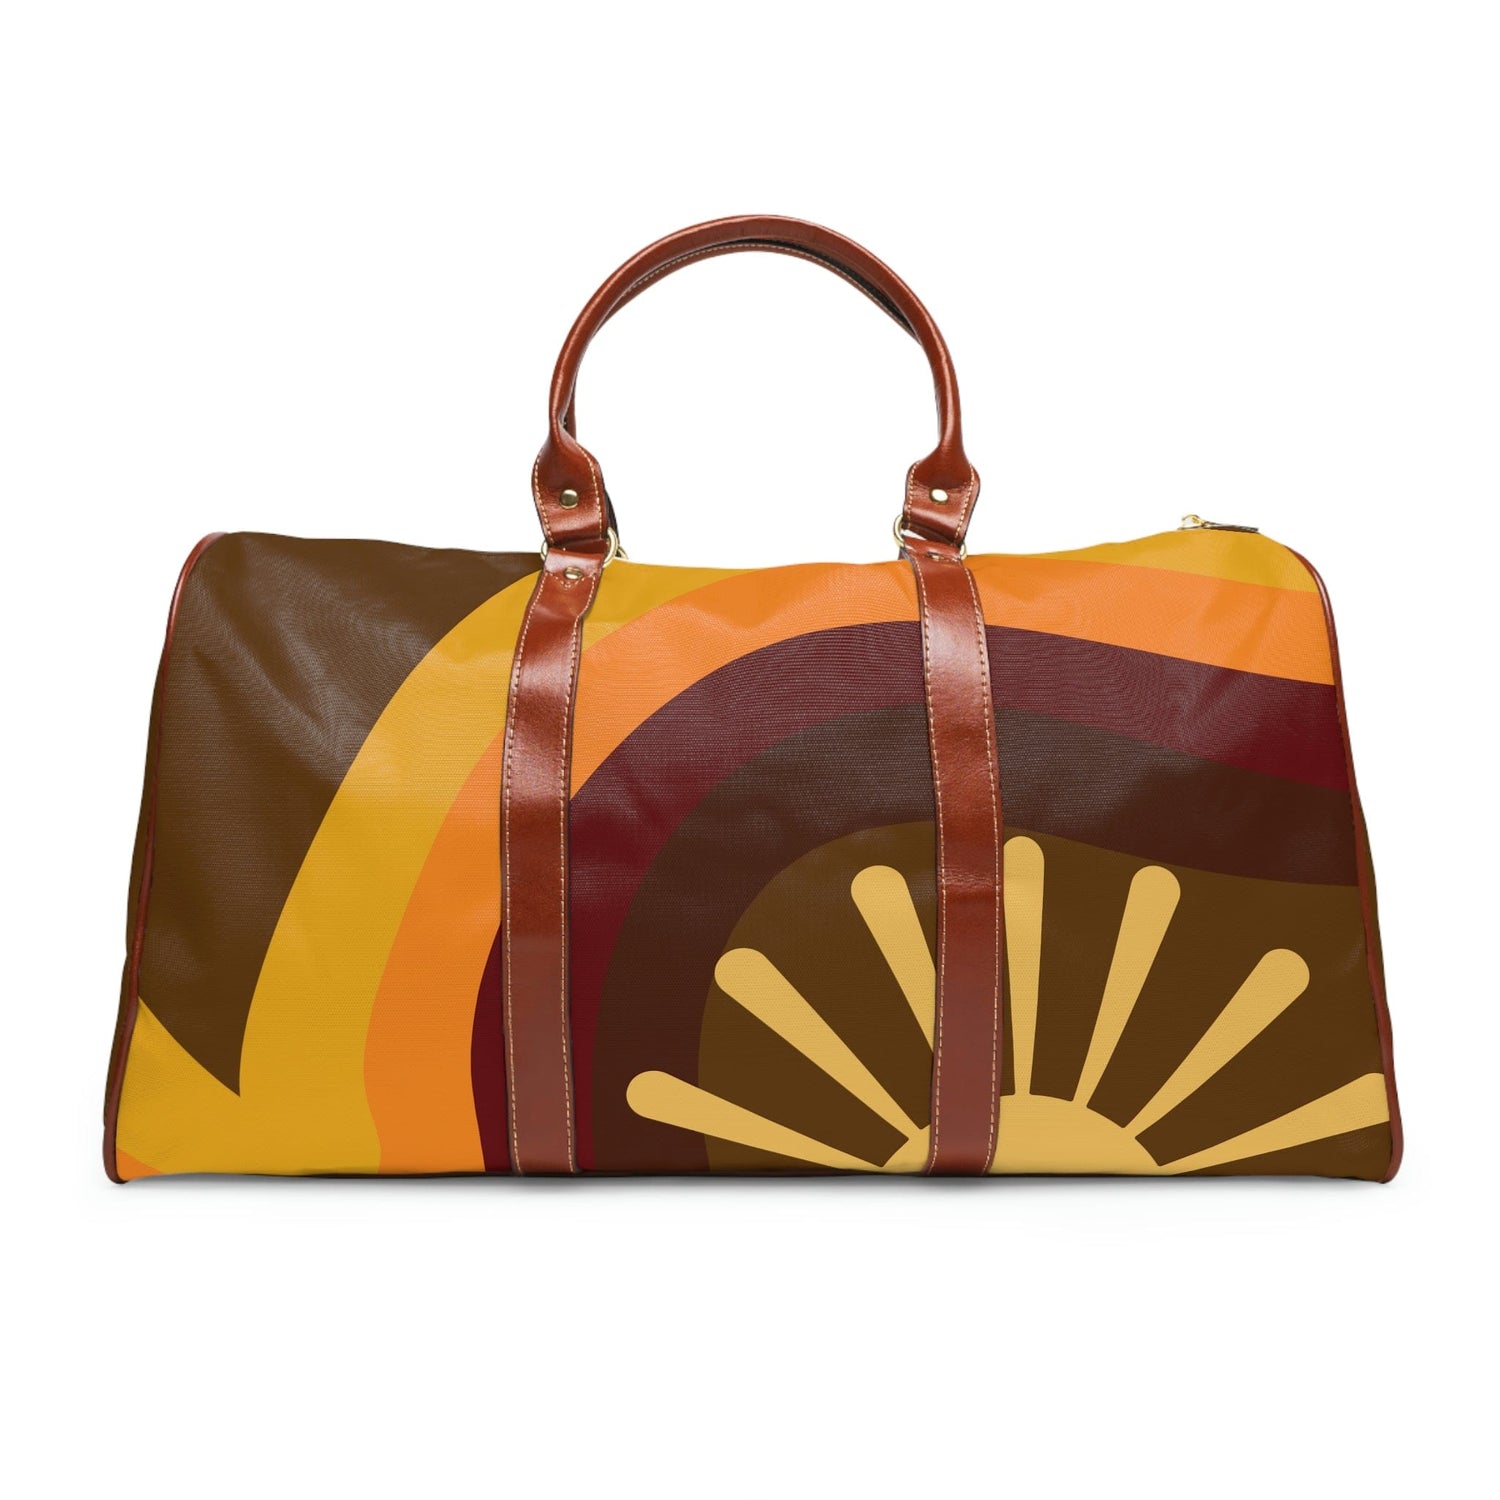 70's Retro Travel Bag, Rising Sun, Groovy, Orange, Brown, Yellow, Hippie,  Mid Mod Weekend Travel Bag - 7592036040859